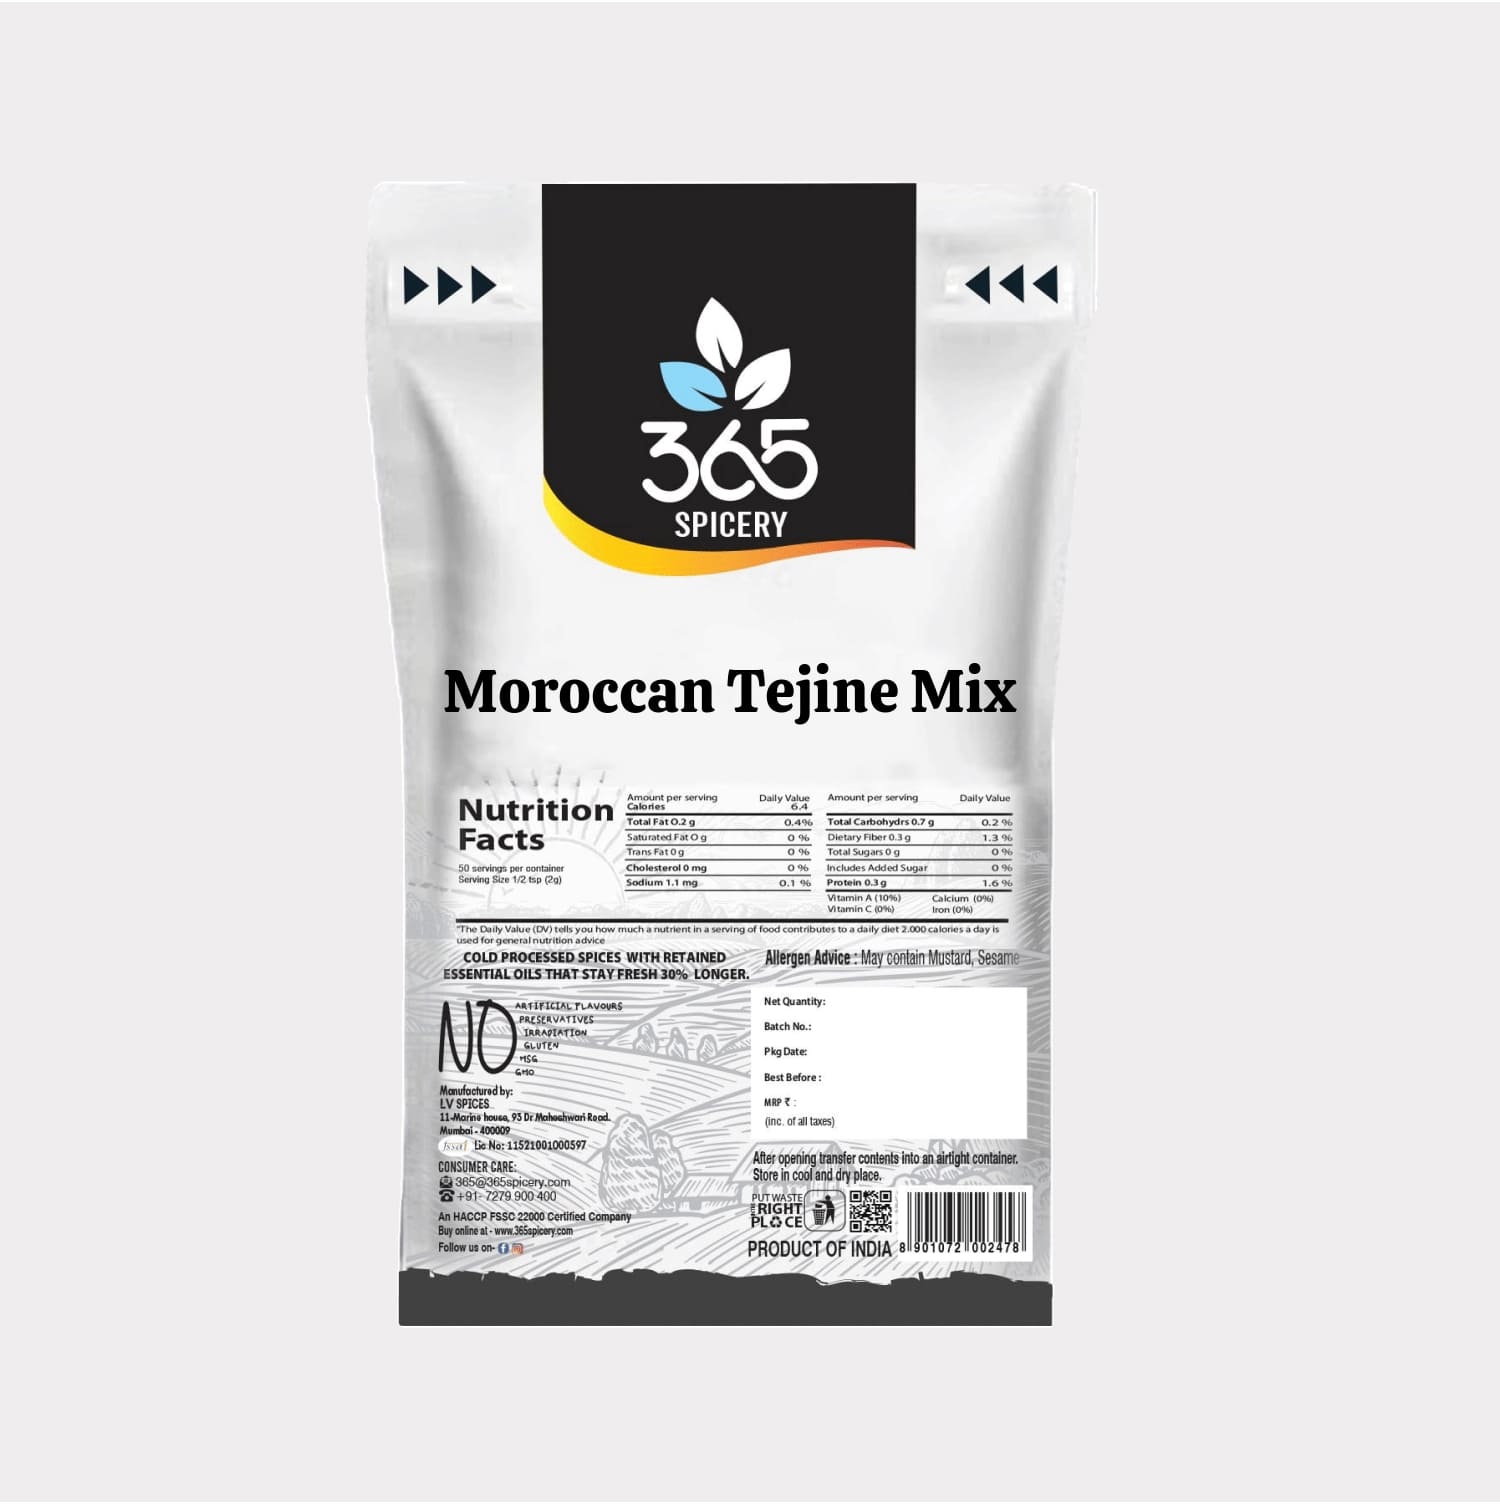 Moroccan Tejine Mix